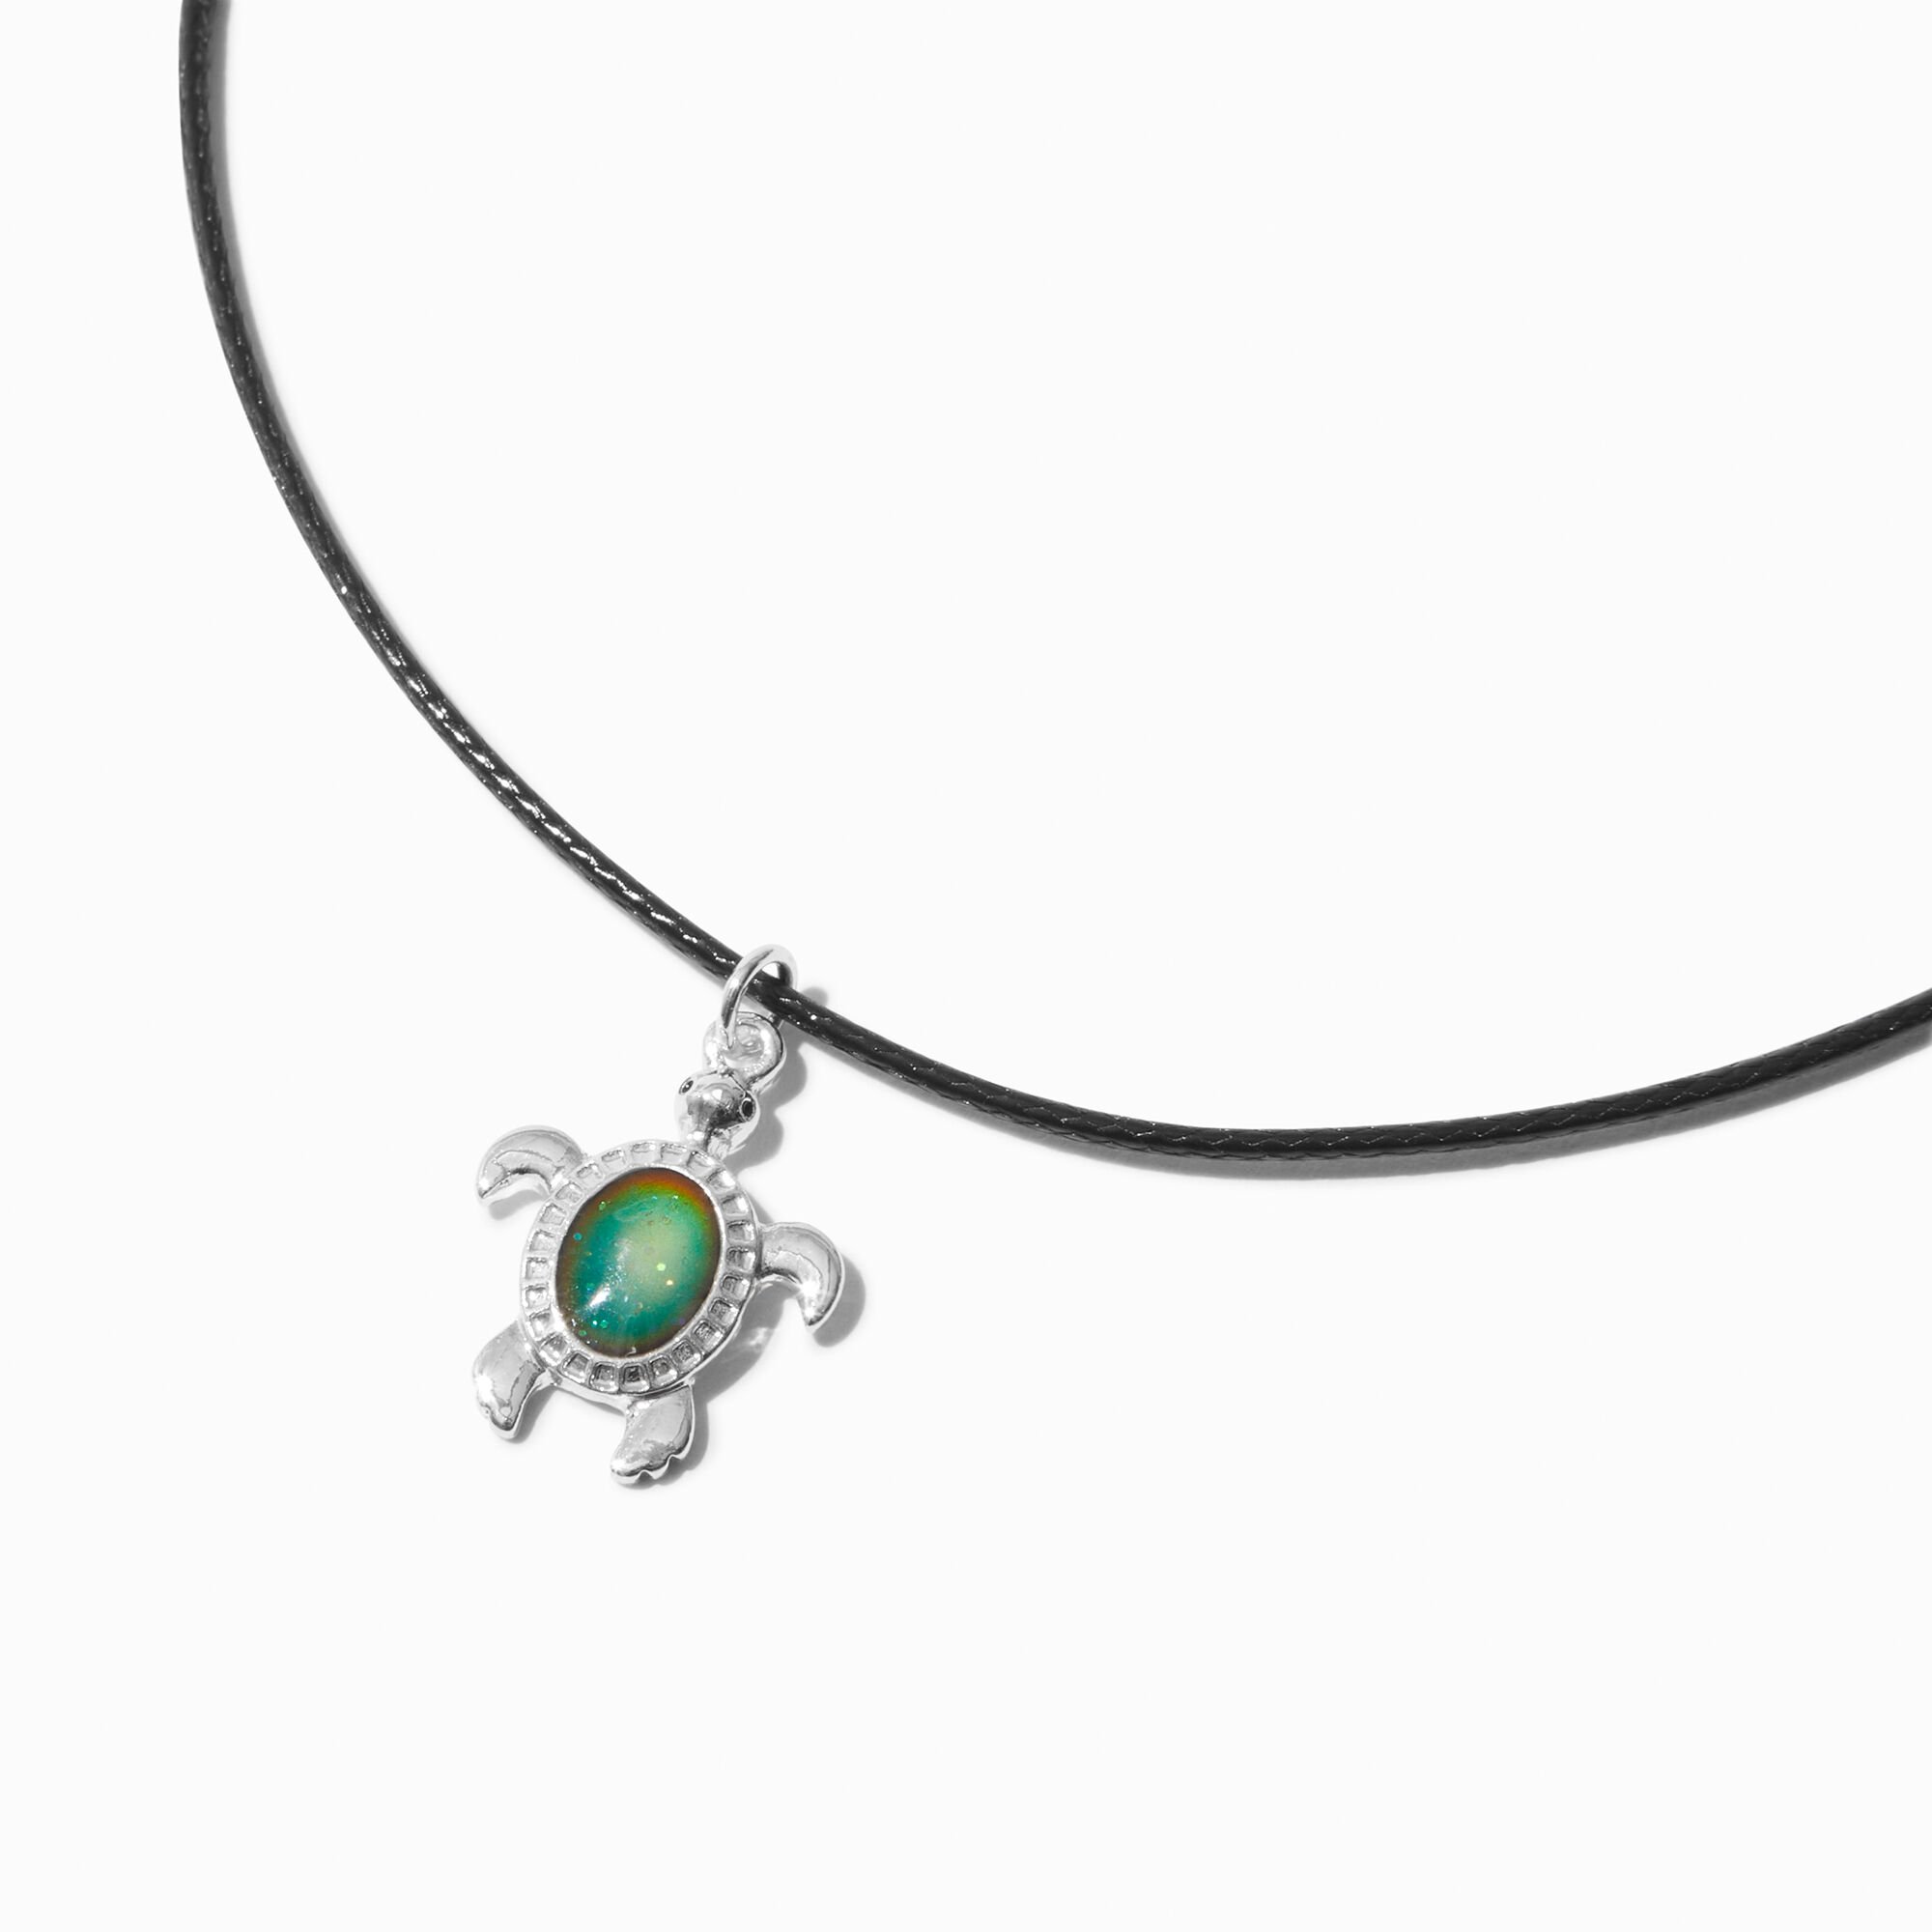 View Claires SilverTone Mood Turtle Cord Pendant Necklace Black information